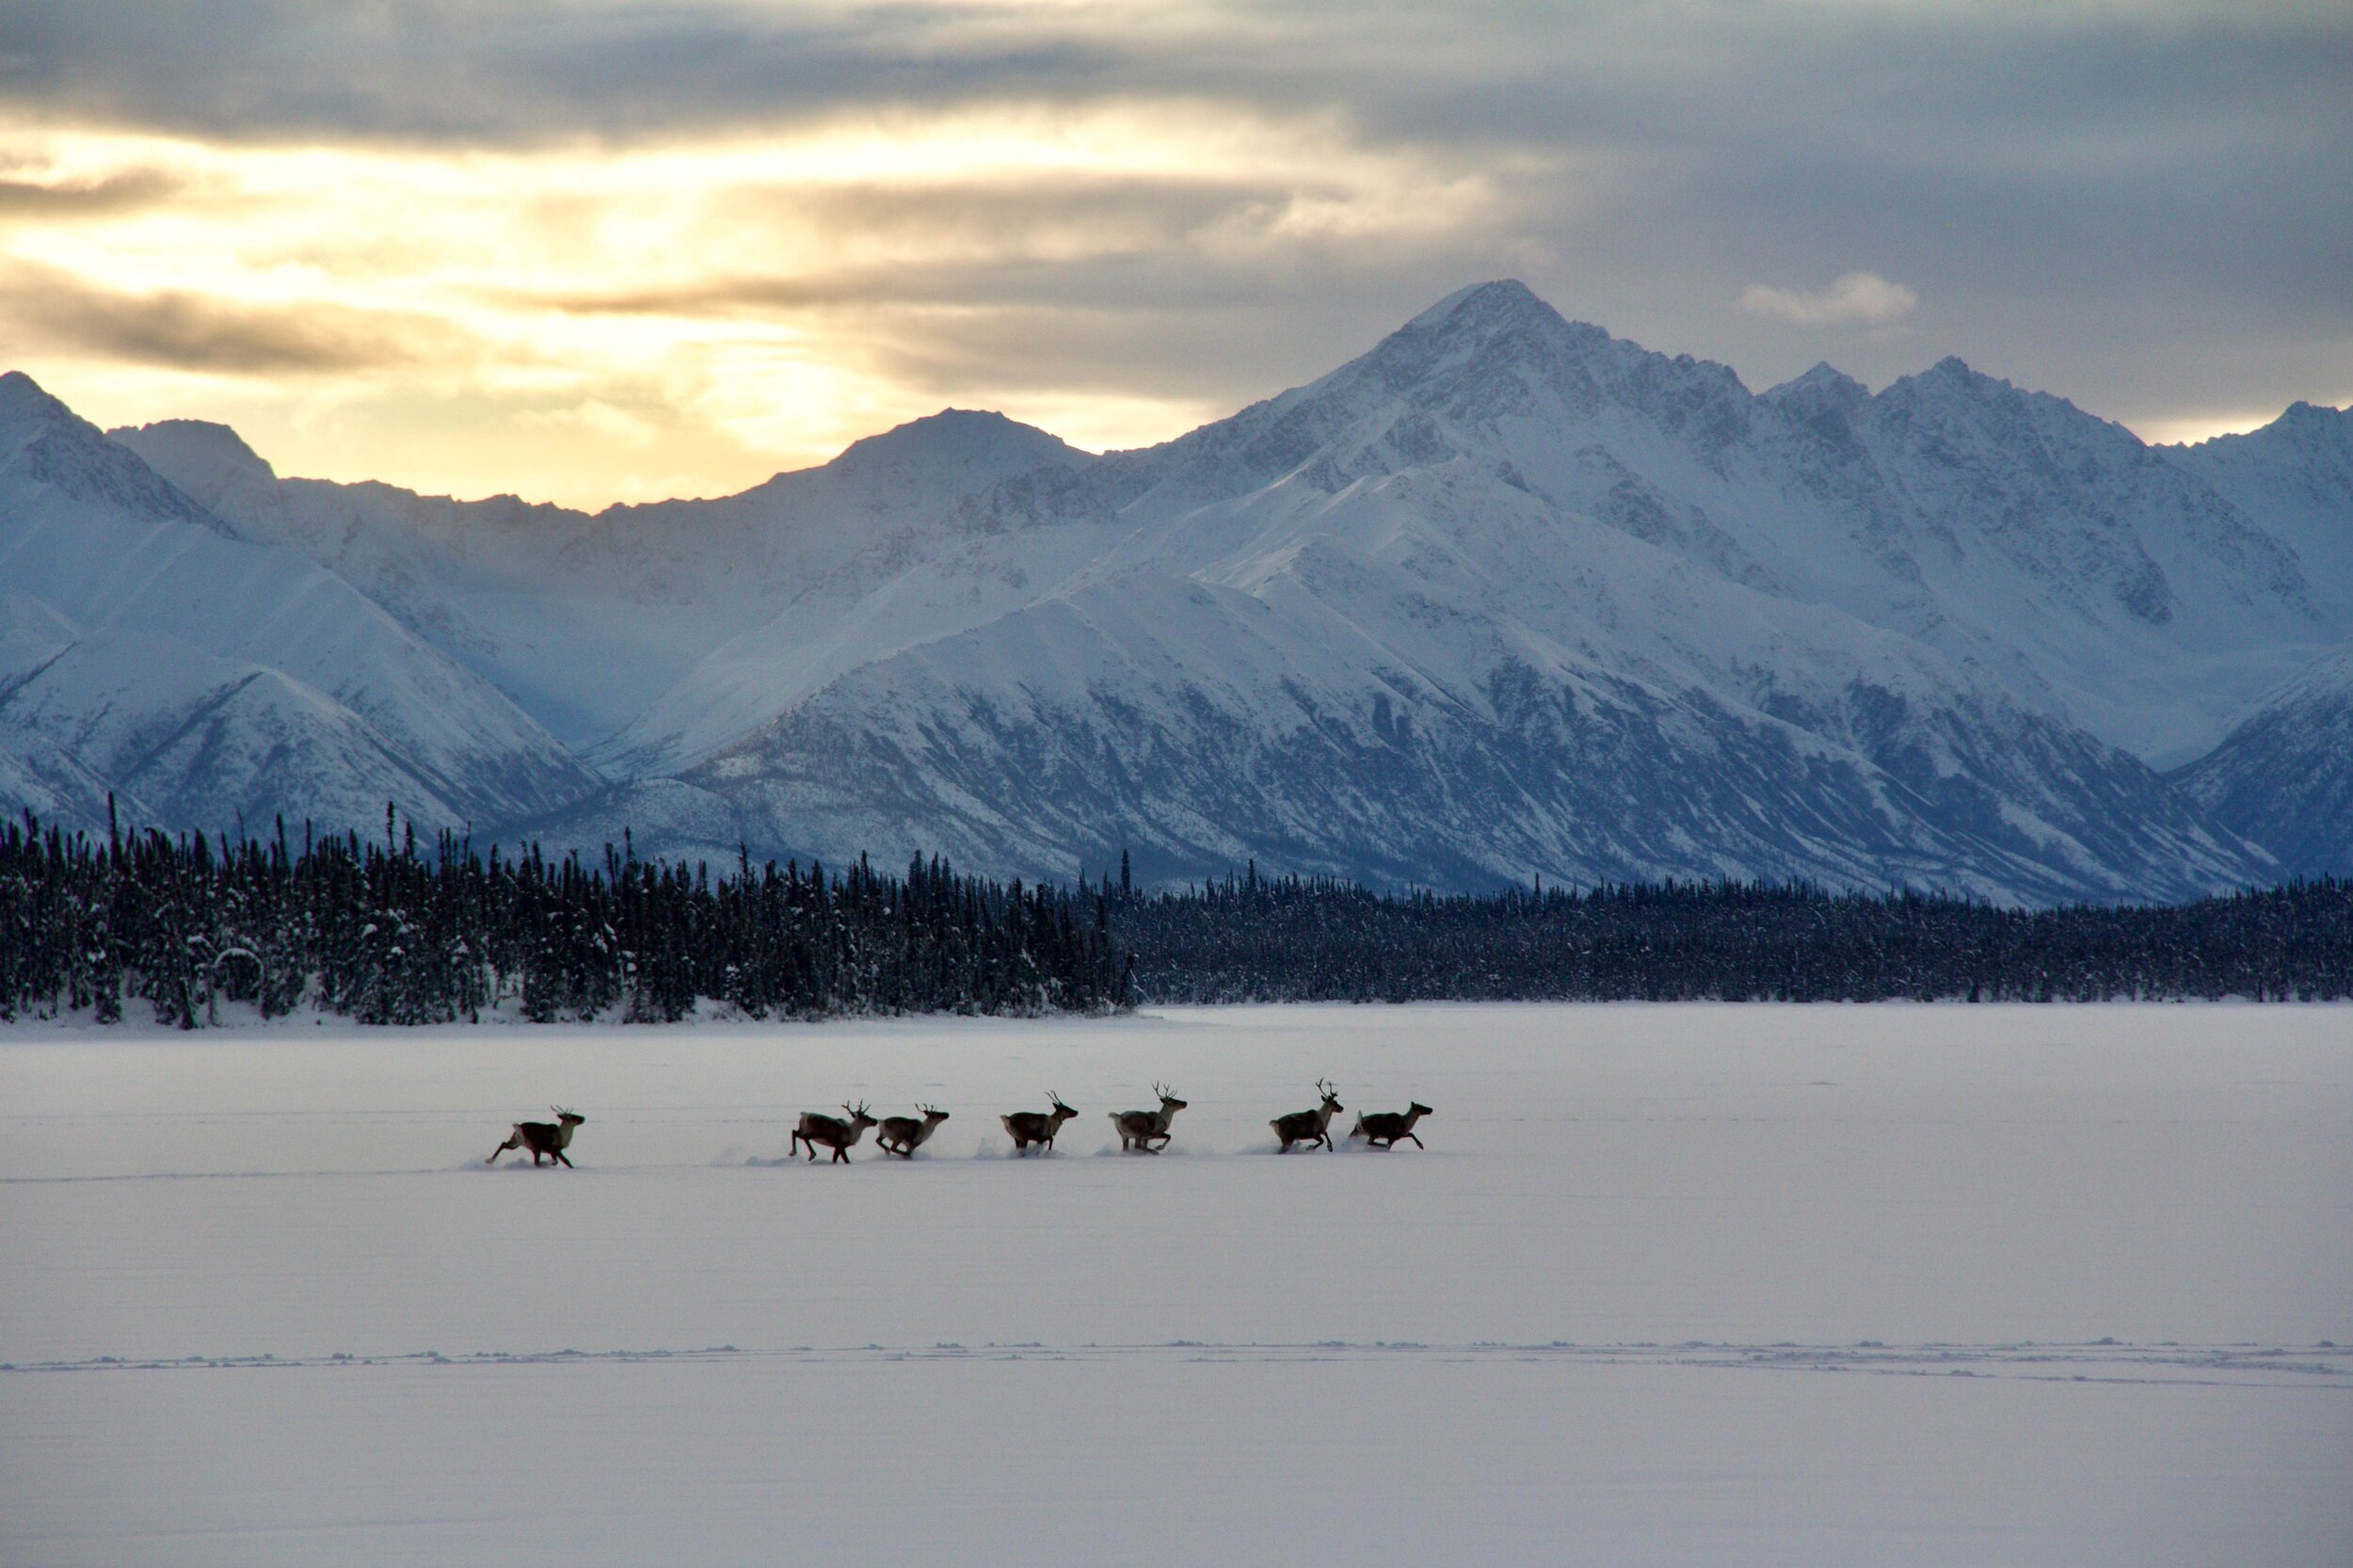  Seven caribou sprint across a snow covered landscape as the sun falls behind a mountain range.  